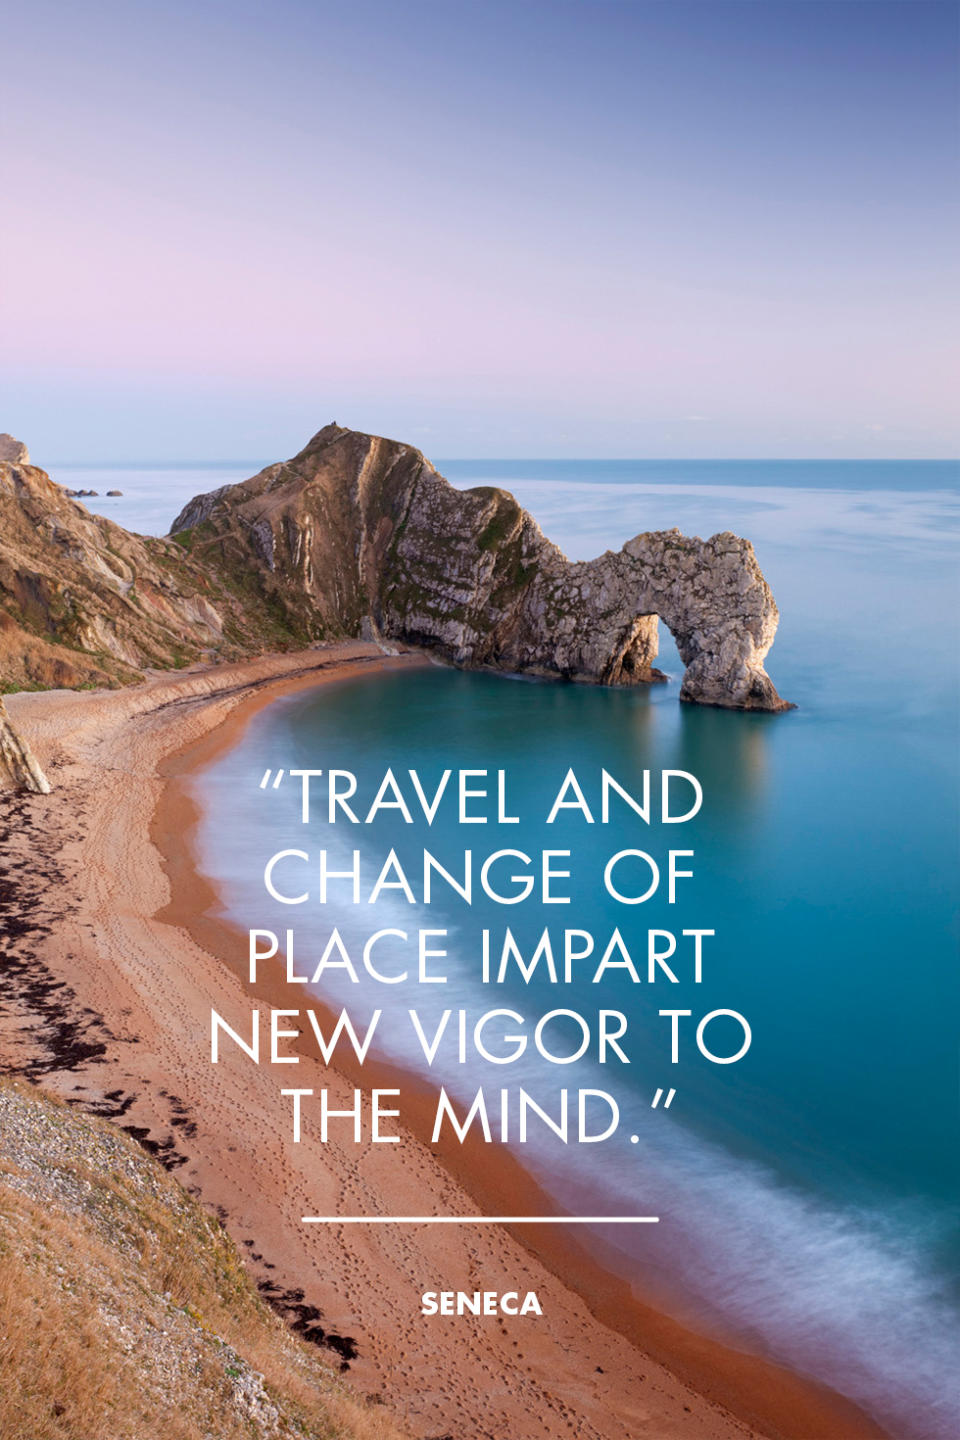 <p>"Travel and change of place impart new vigor to the mind." - Seneca</p><p>Photo: Dorset, United Kingdom</p>